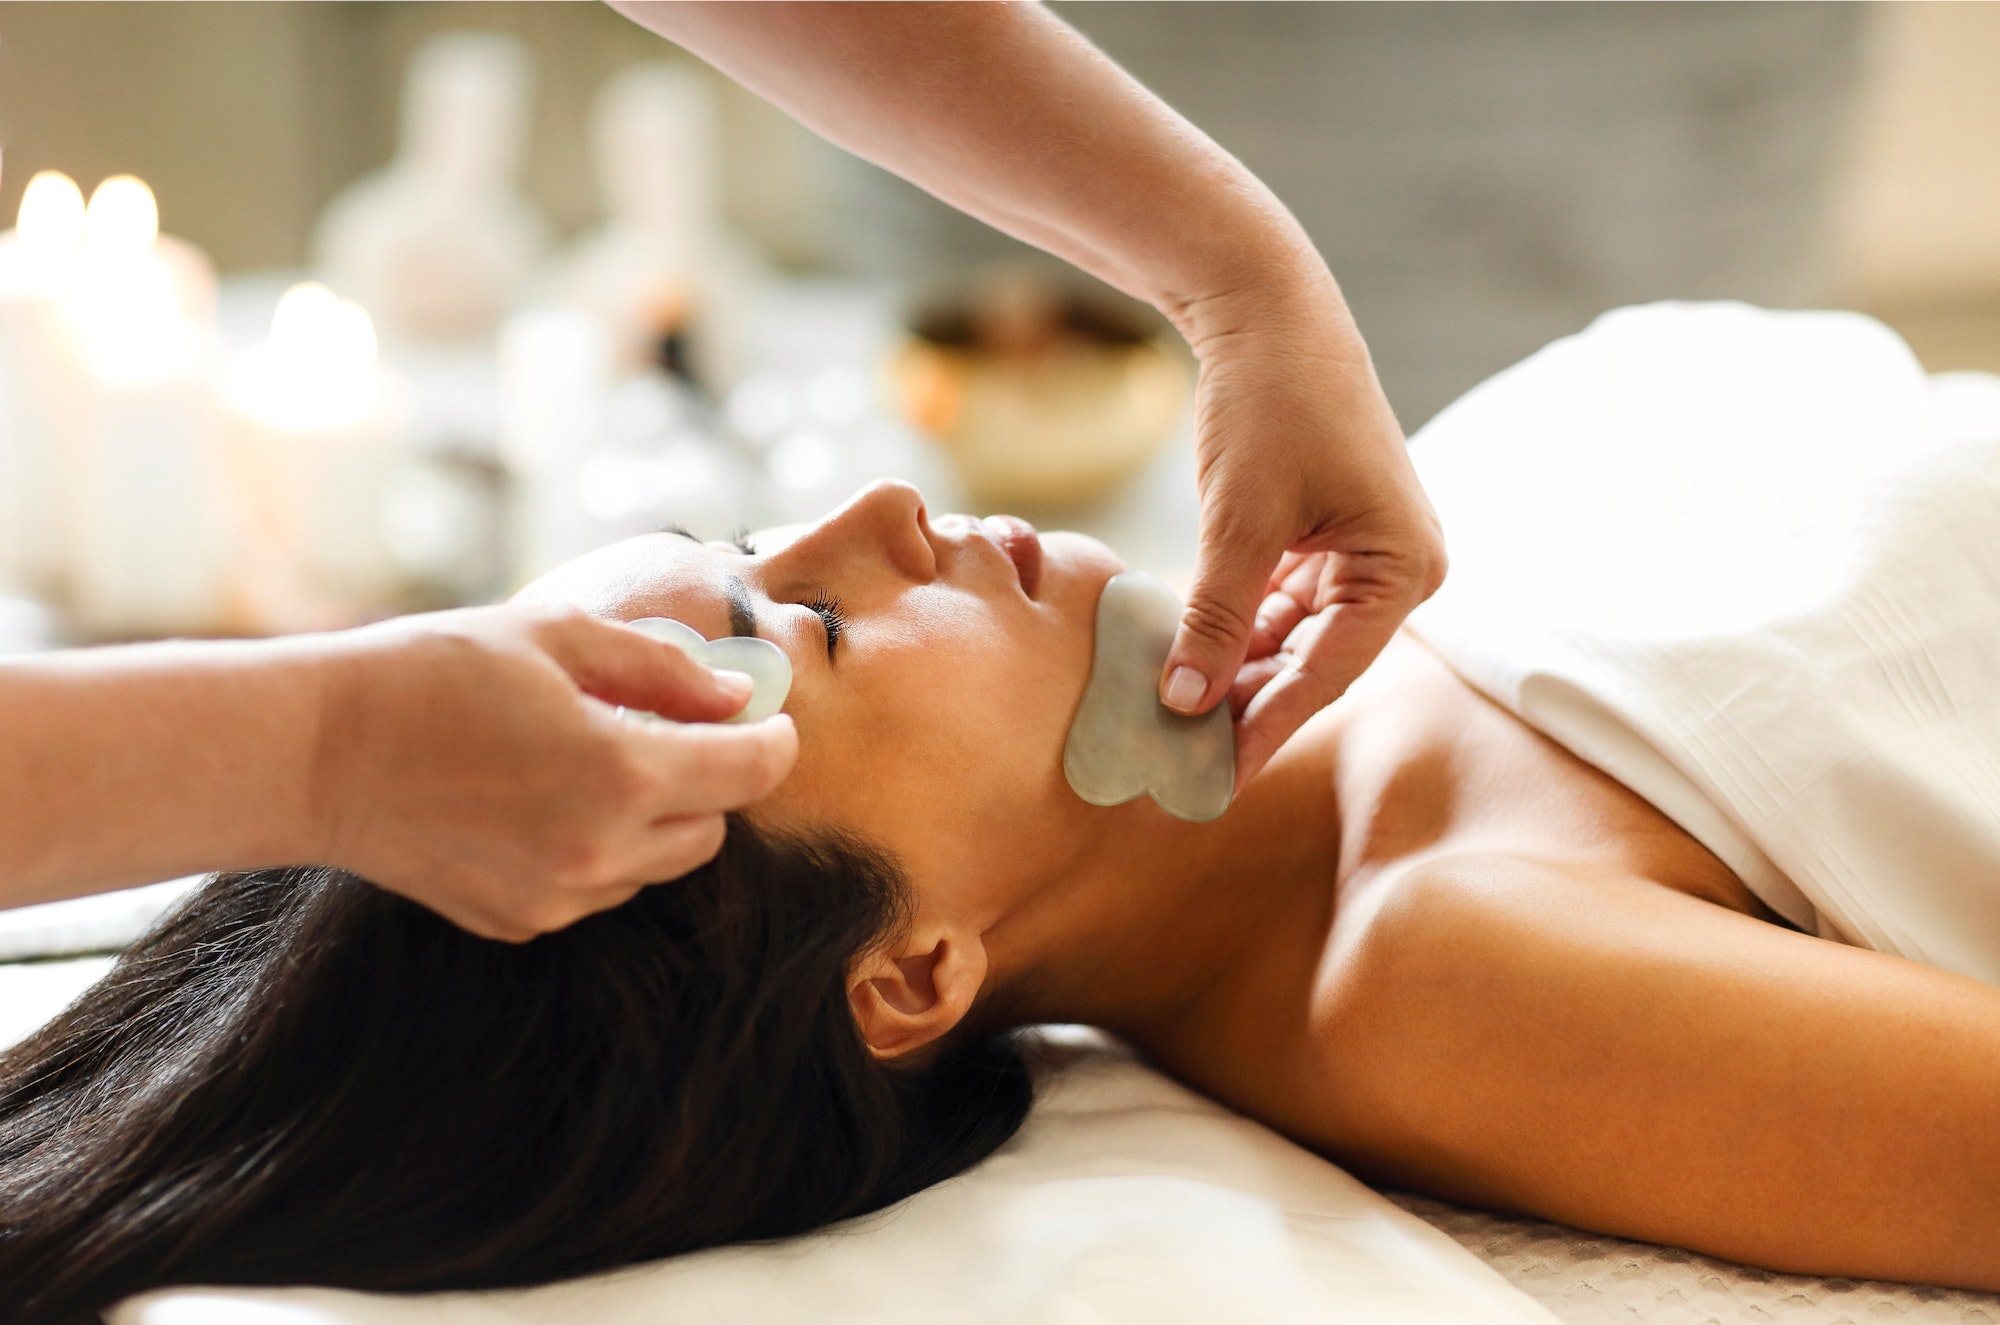 Gua sha massage or beauty treatment in spa salon